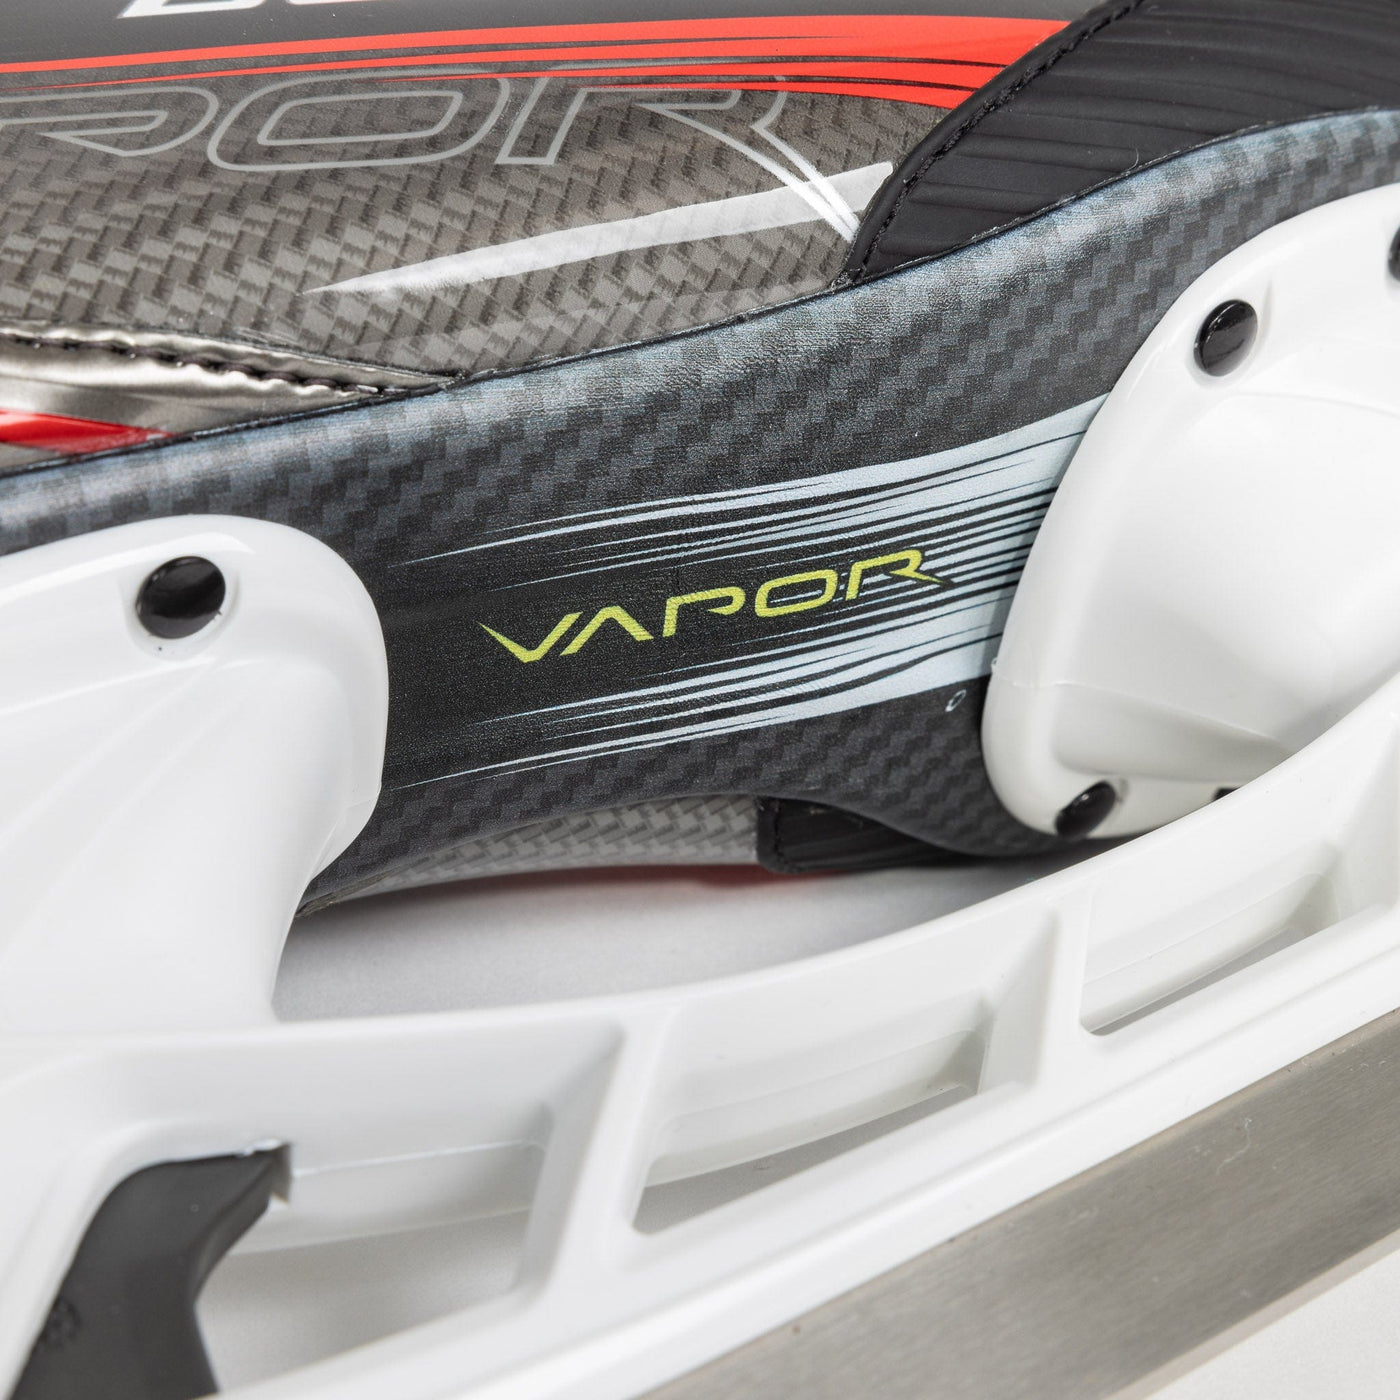 Bauer Vapor X3 Senior Hockey Skates - The Hockey Shop Source For Sports